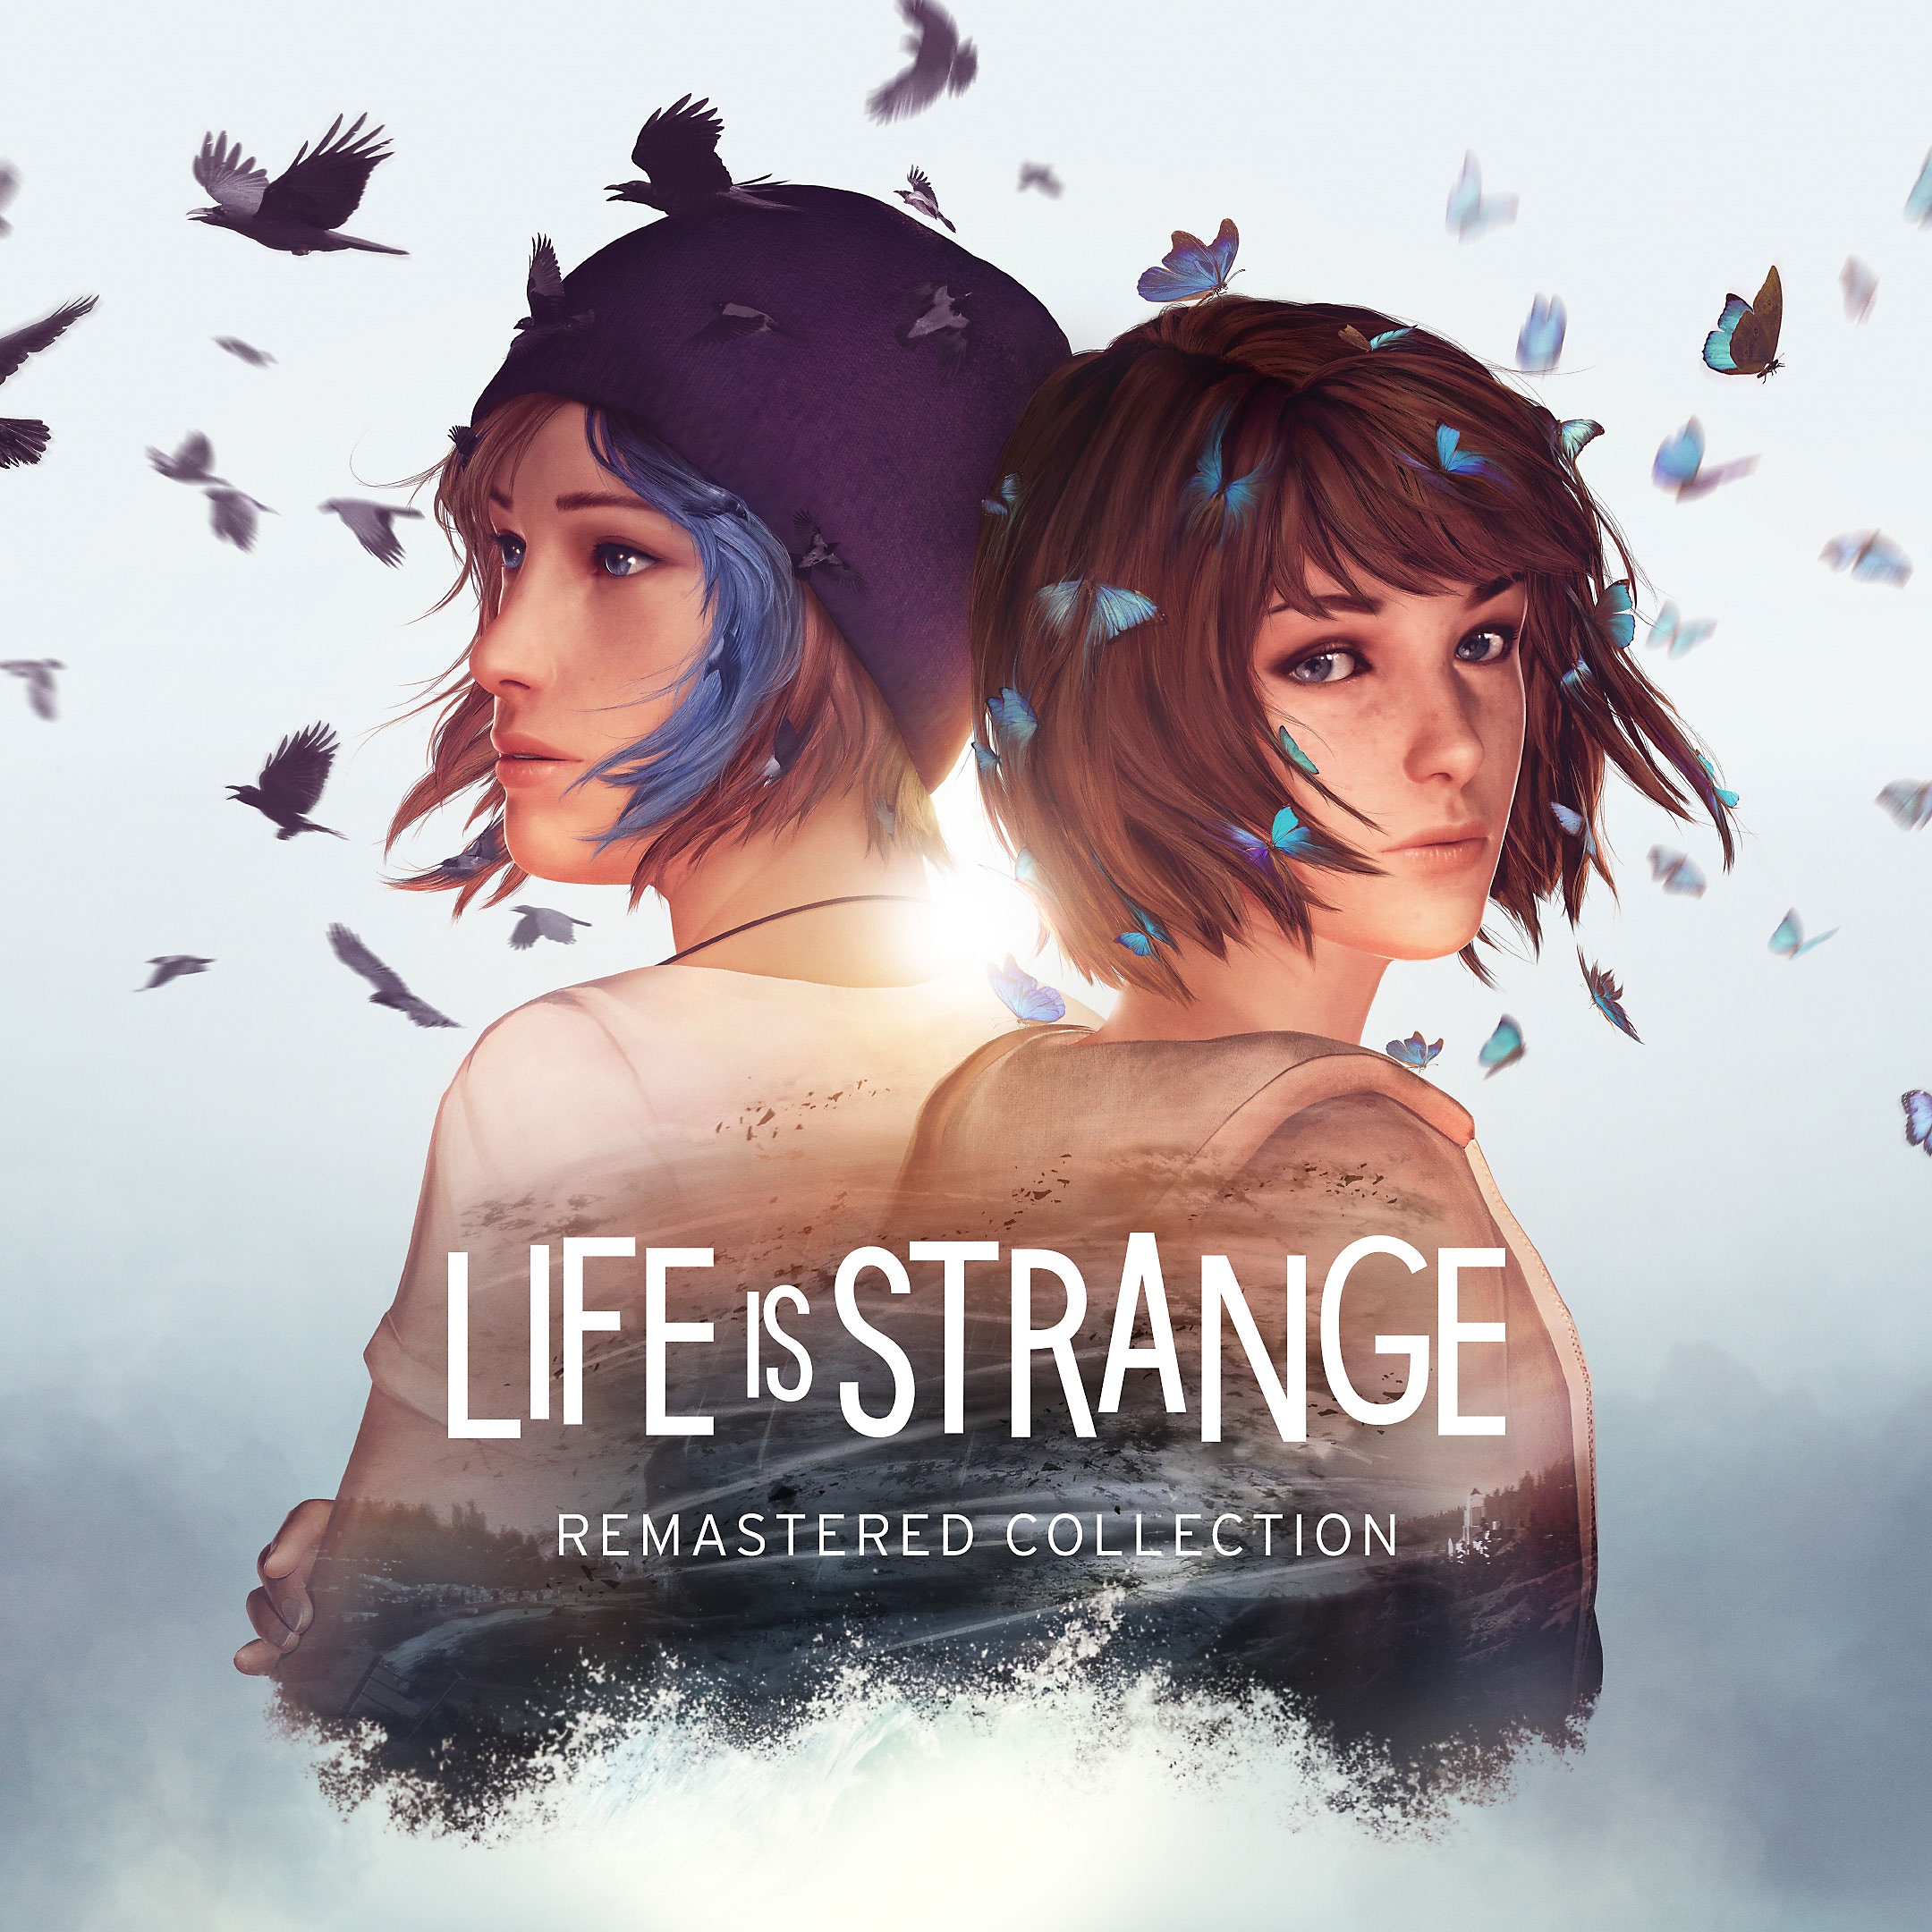 Life is Strange Remastered Collection mağaza görseli